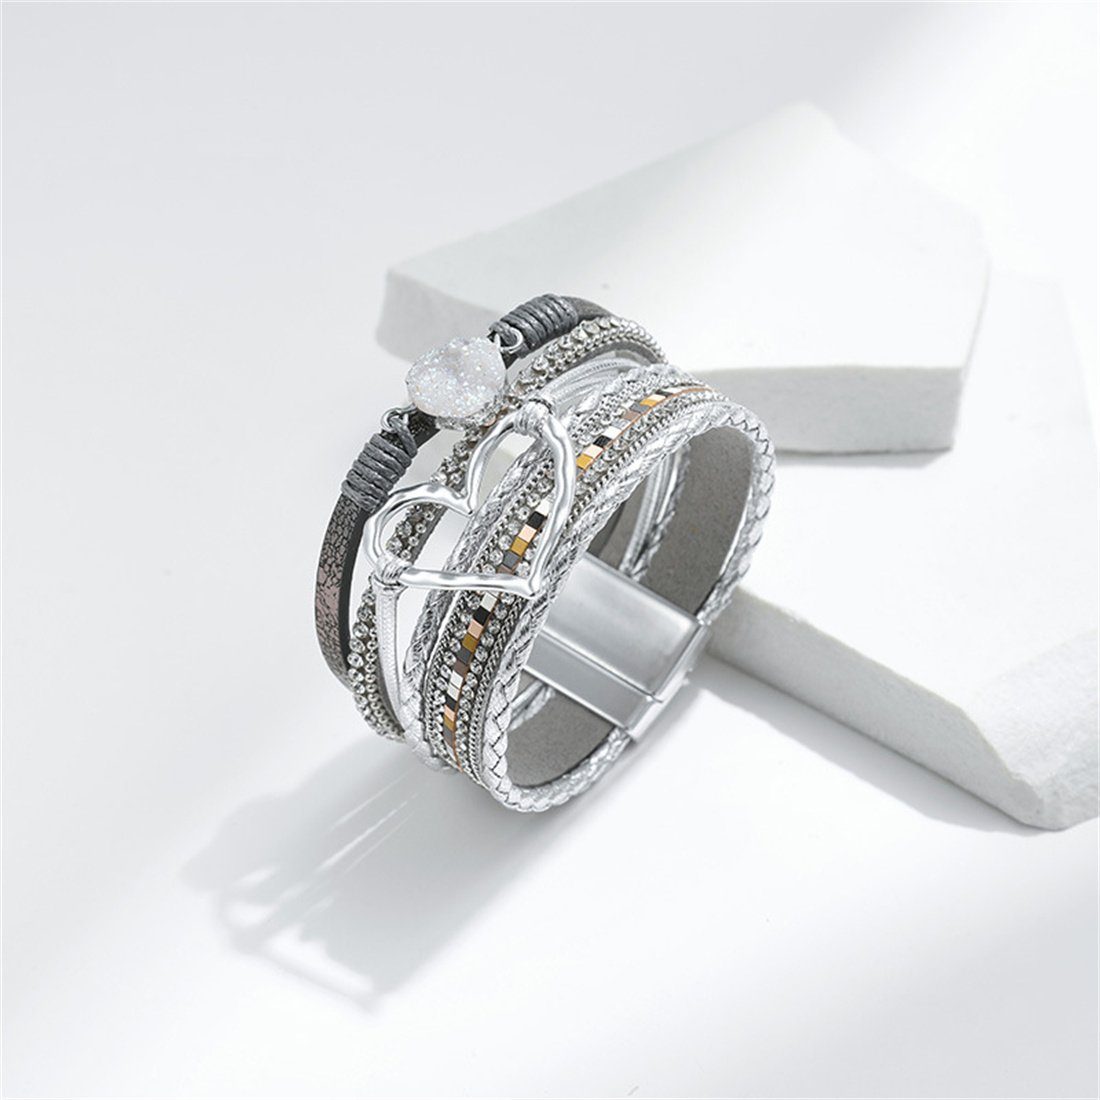 Silber mehrlagiges Armband DÖRÖY Armband mit Lederarmband Bohème Liebe Magnetverschluss Schmuck